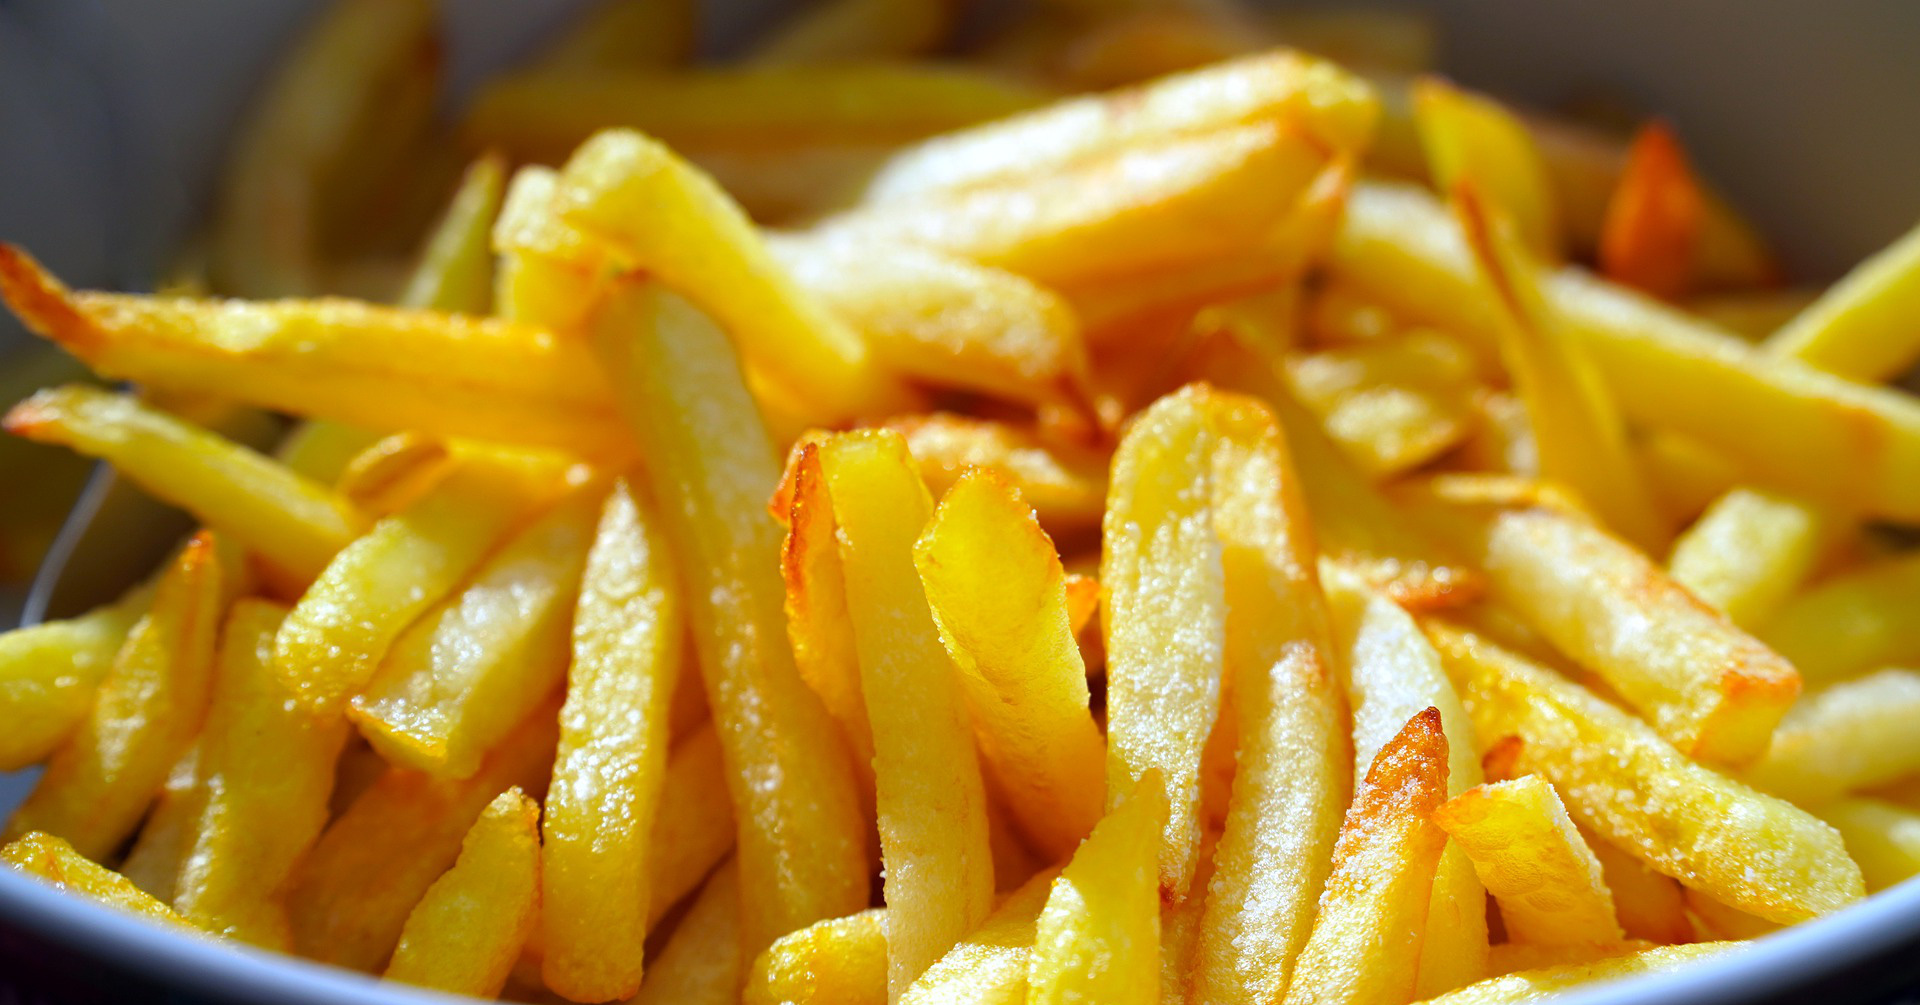 Wrong manipulations in potato processing cause loss of vitamins